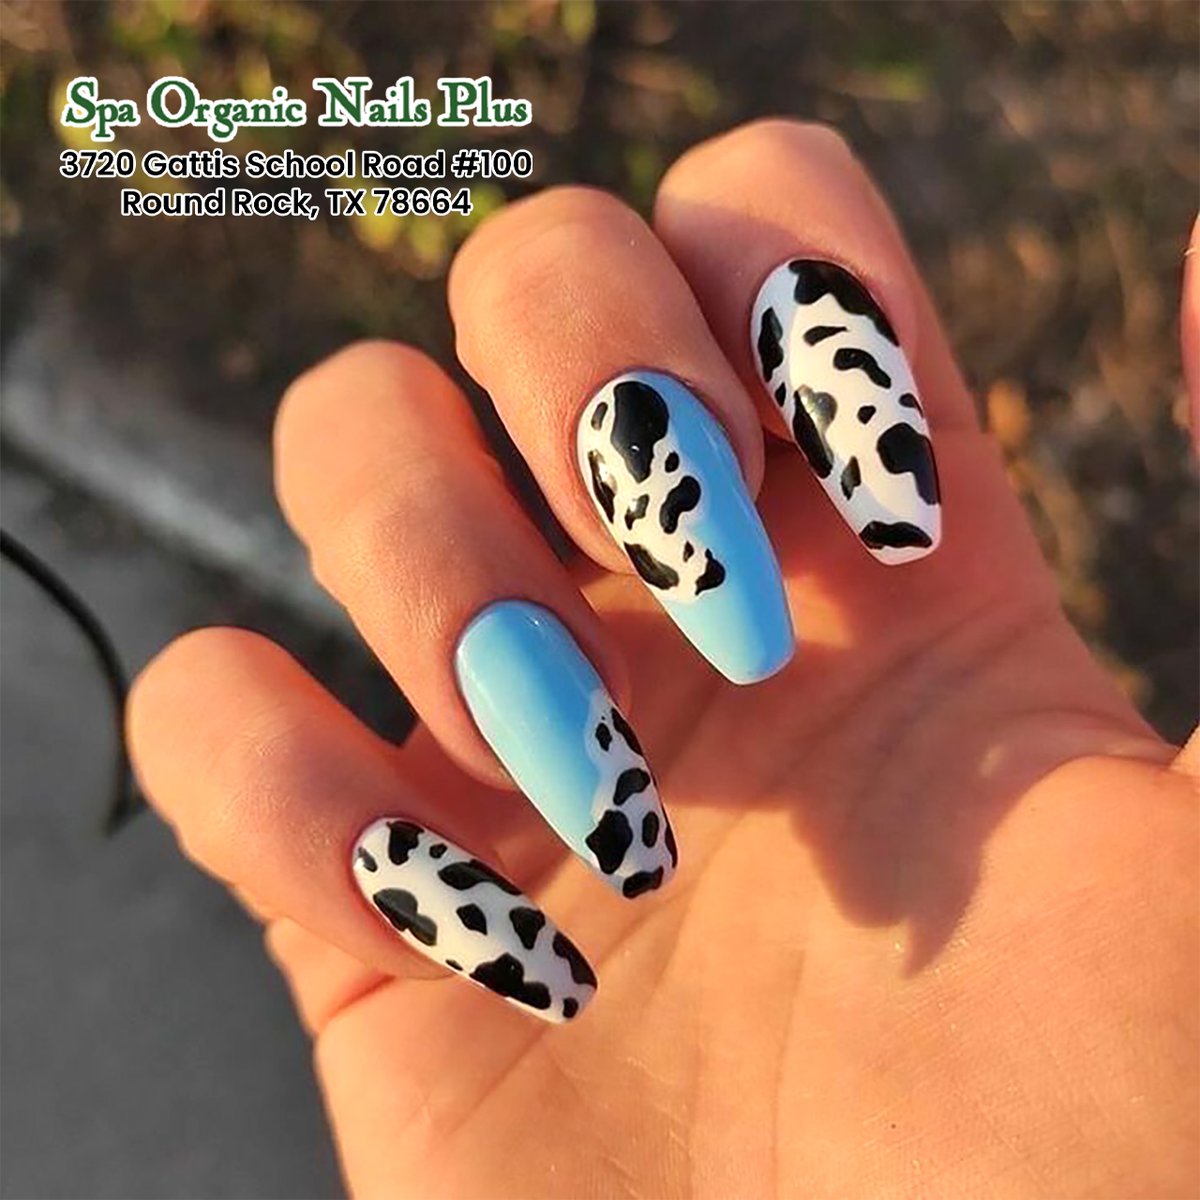 Cow Print Nails Design Ideas - Spa Organic Nails Plus
🎊spaorganicnailplusroundrock.com
#cowprintnails #cowprint #RoundRock
#spa #organicnails #nails #acrylicnails #manicure #organic #naildesigns #ilovenails #gelish #notpolish